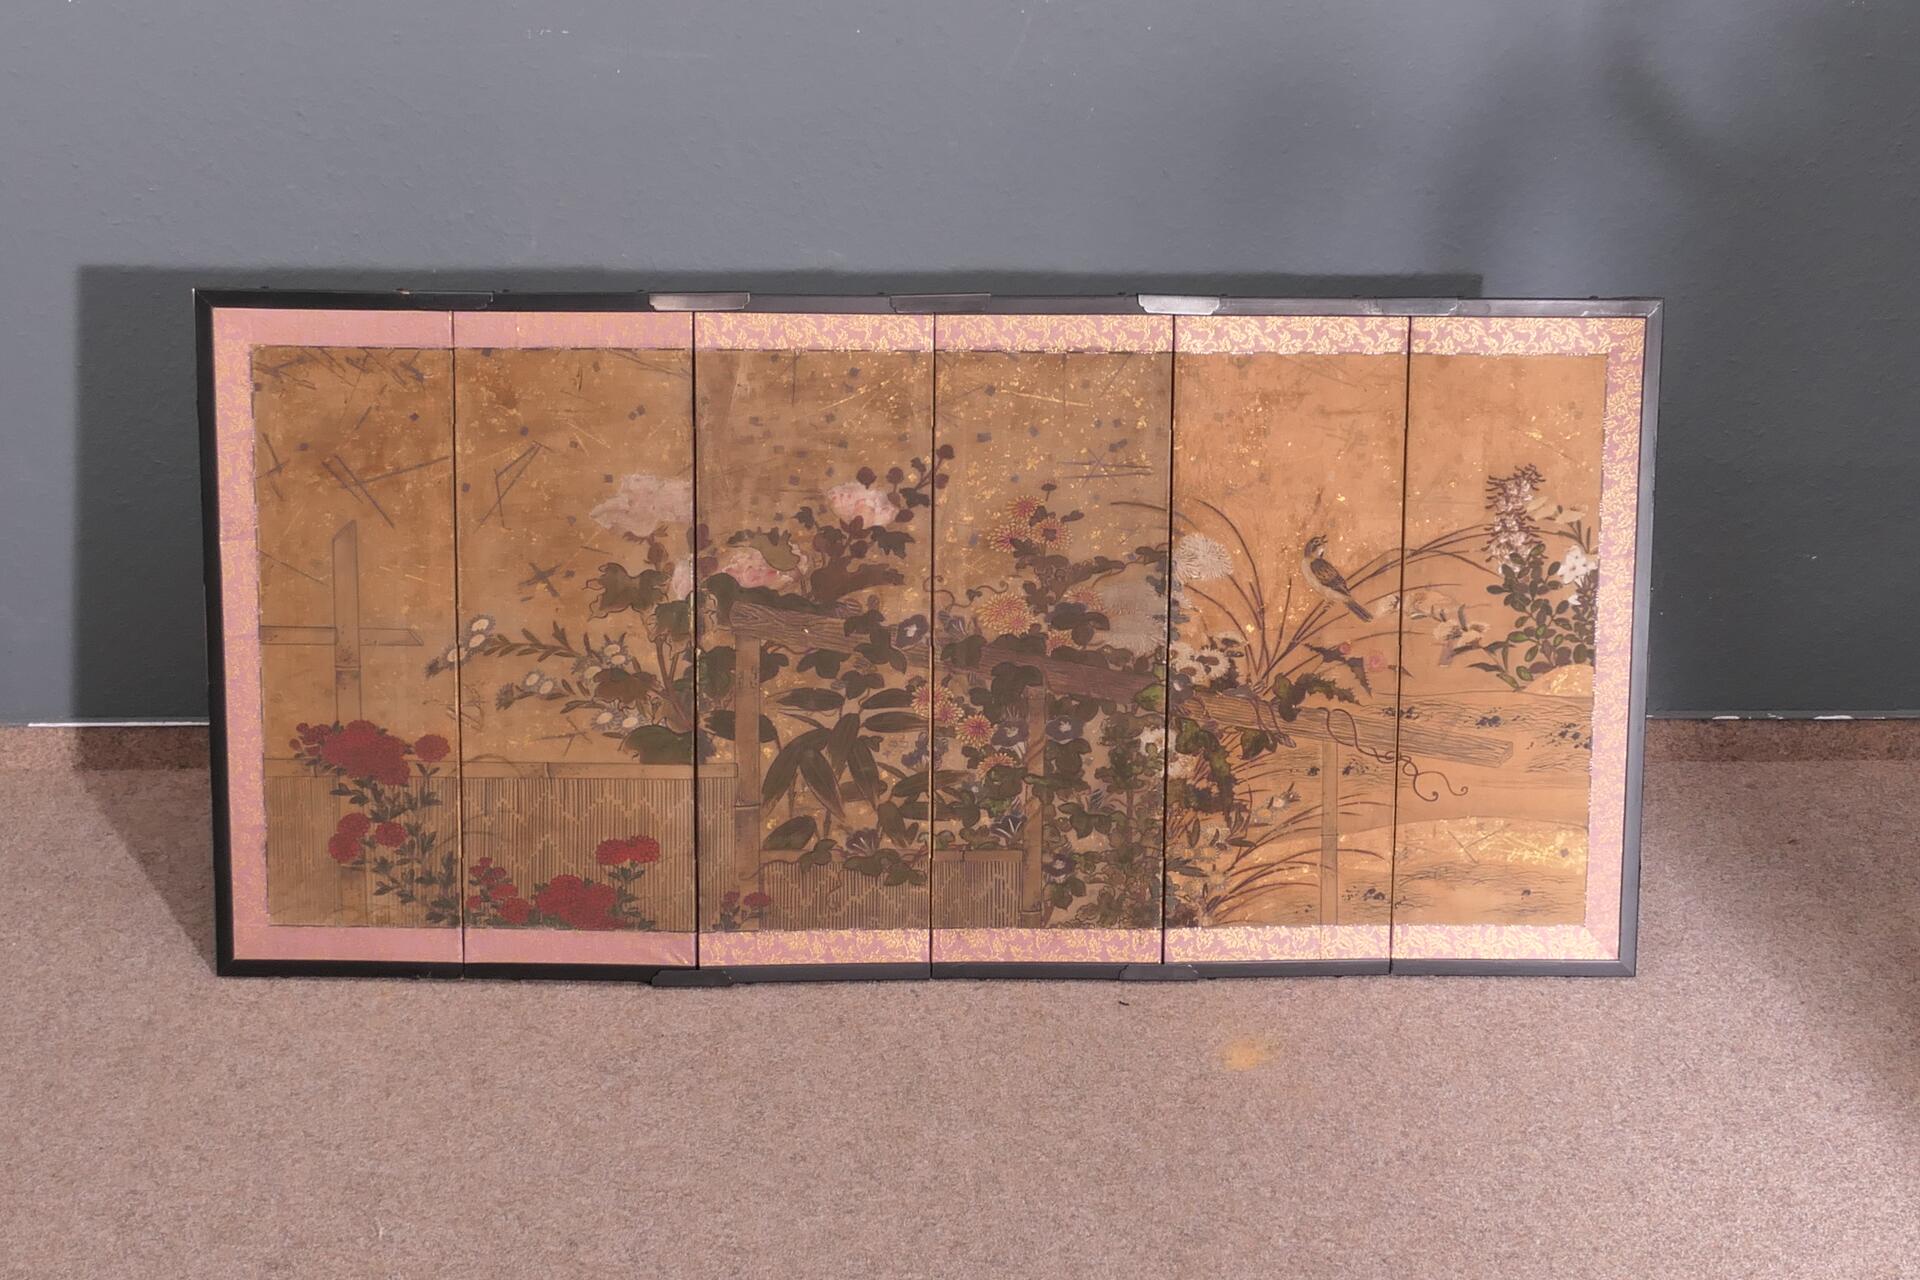 6 tlg. Paravent - Wandbild, Asien, 2. Hälfte 20. Jhd., ca. 63 x 132 cm, guter Erhalt. Zusammenklapp